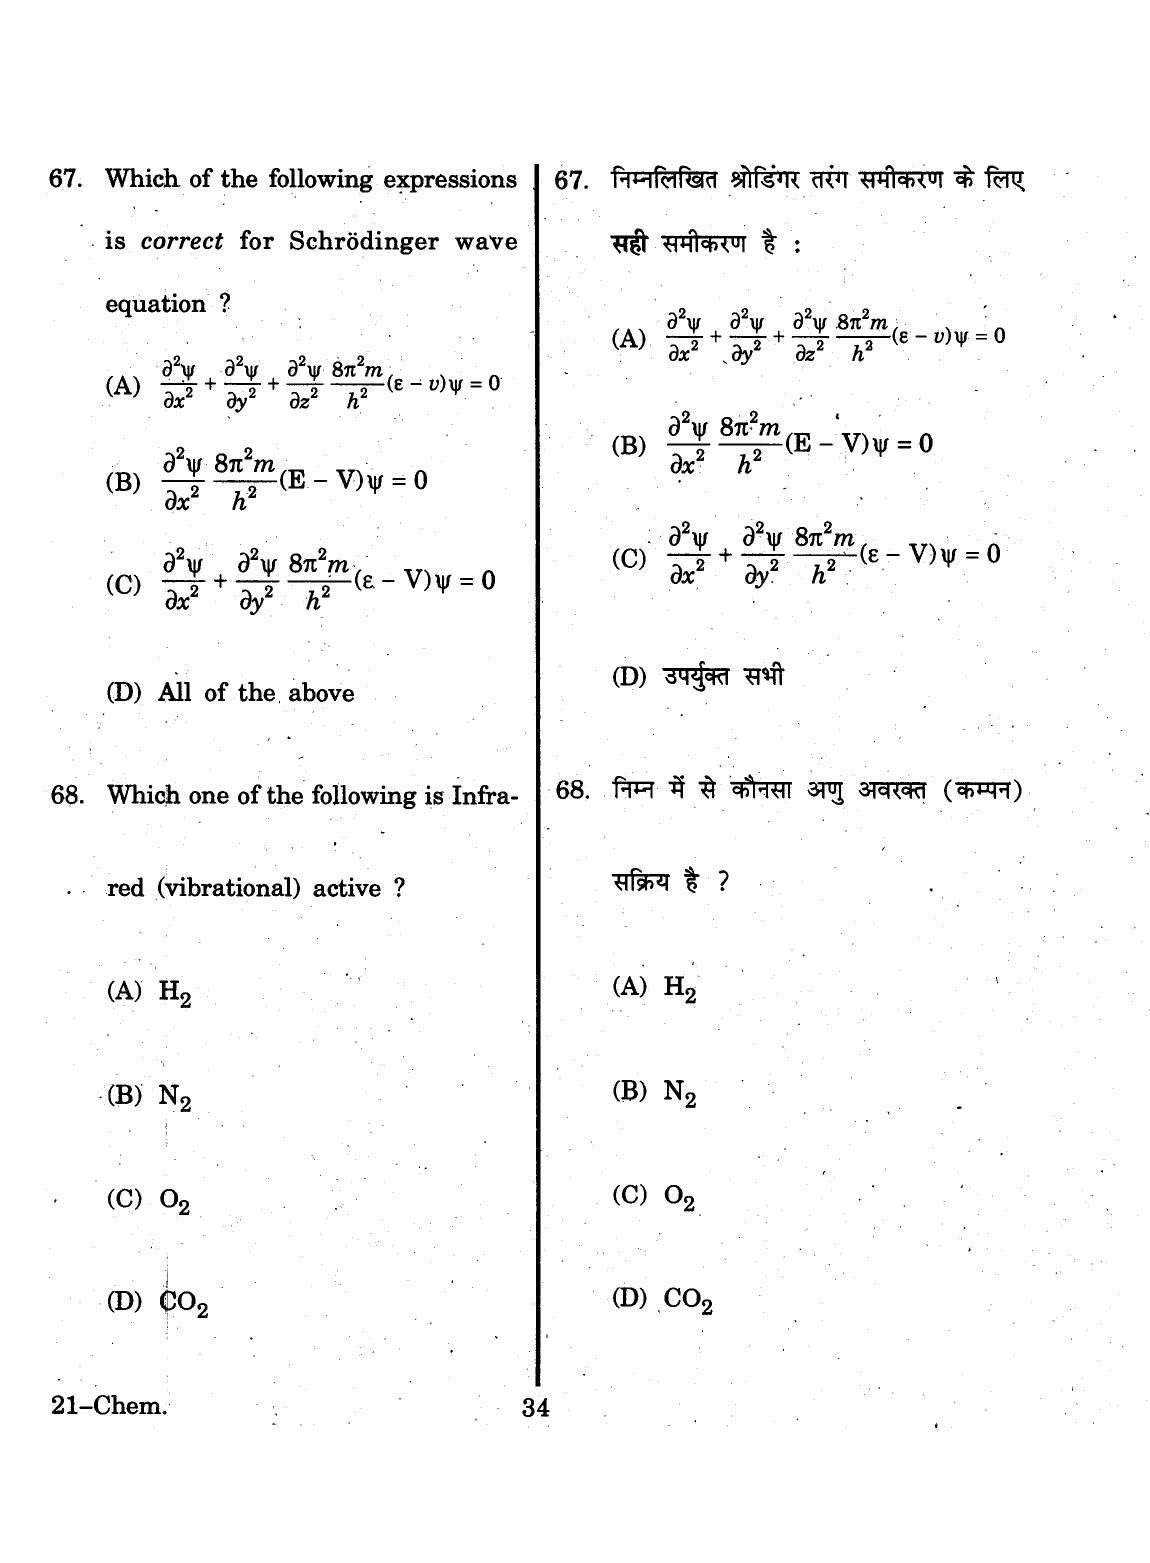 URATPG 2015 Chemisty Question Paper - Page 34